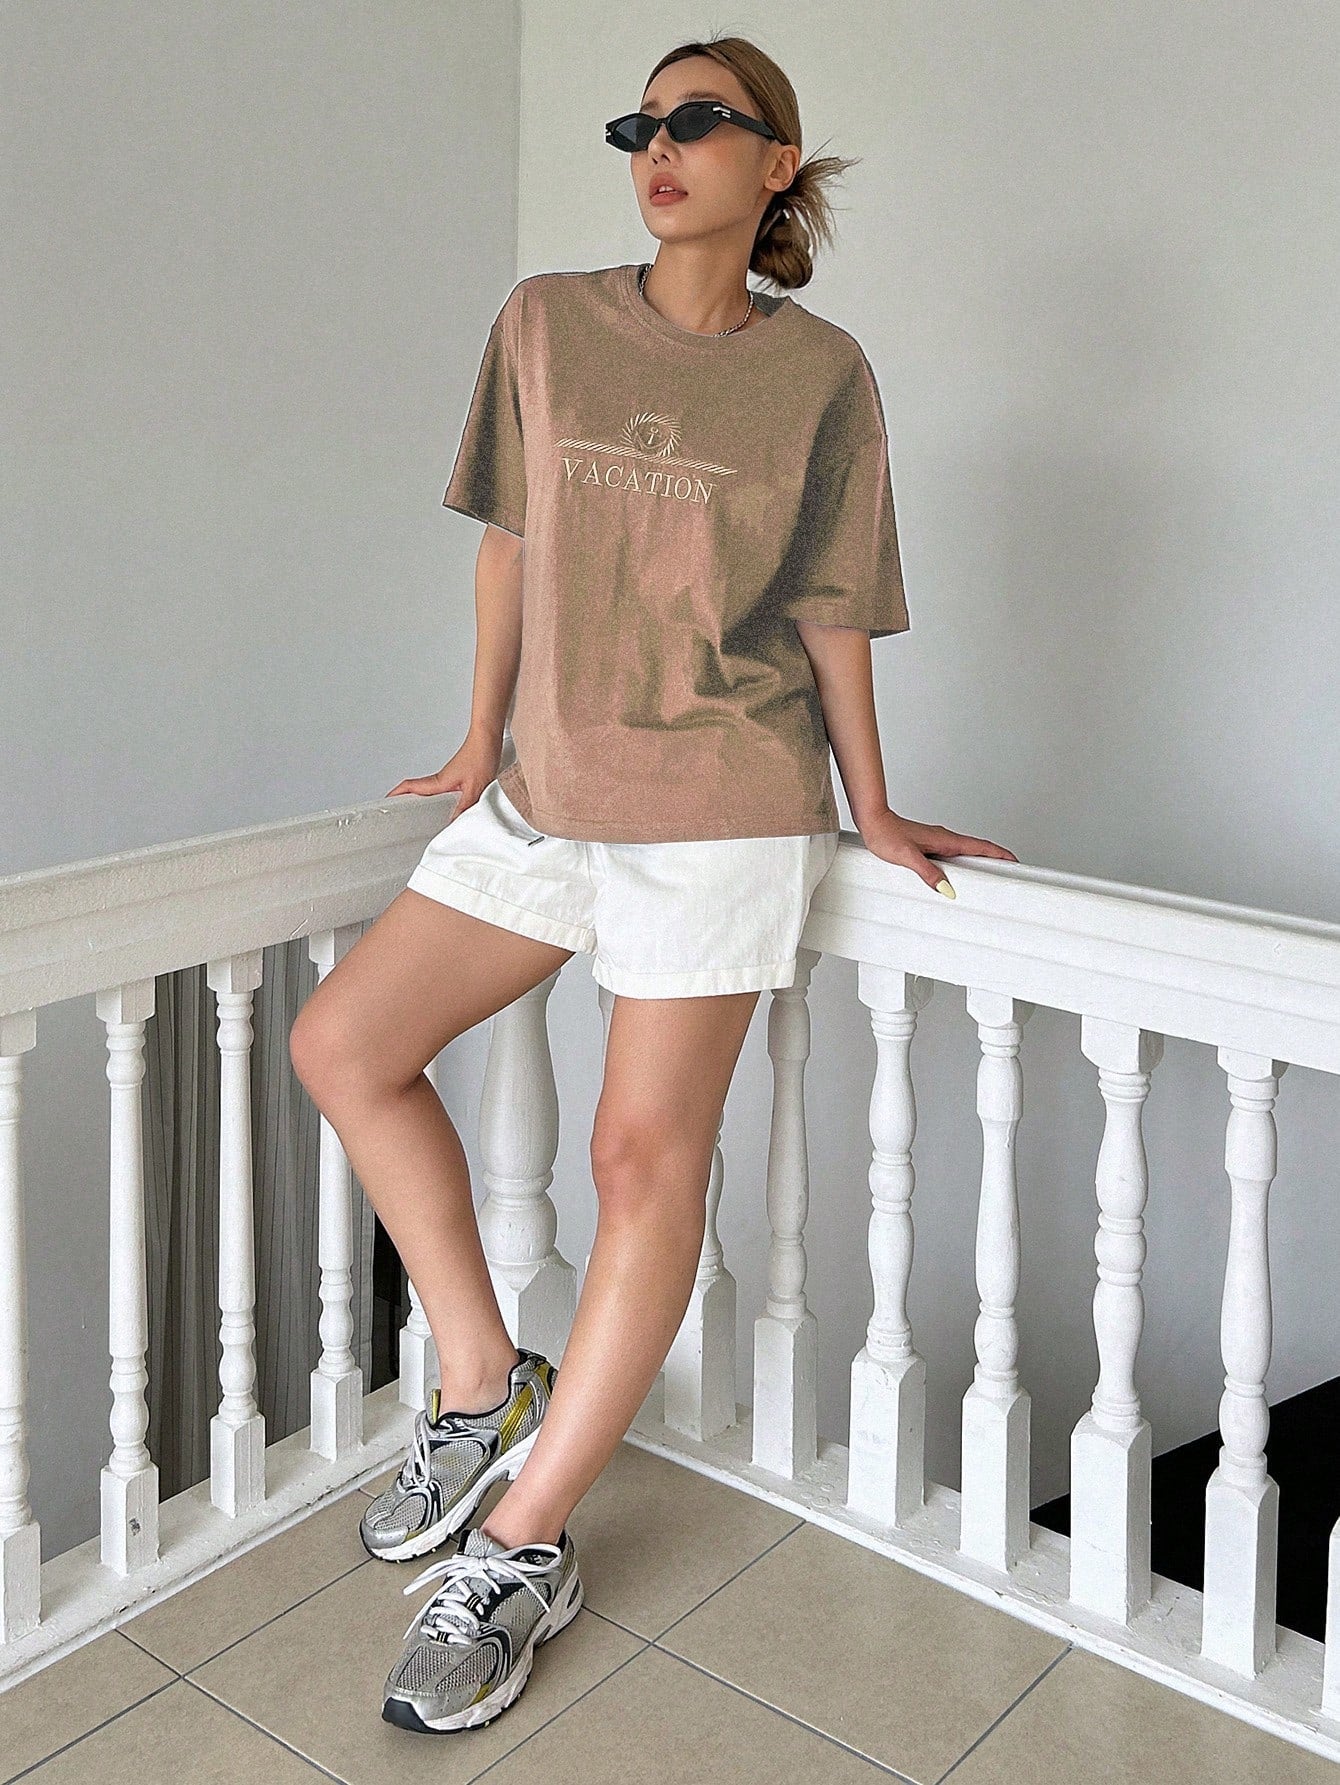 Ladies' Summer Casual T-Shirt, Round Neck, Short Sleeve, Embroidered Alphabet Design